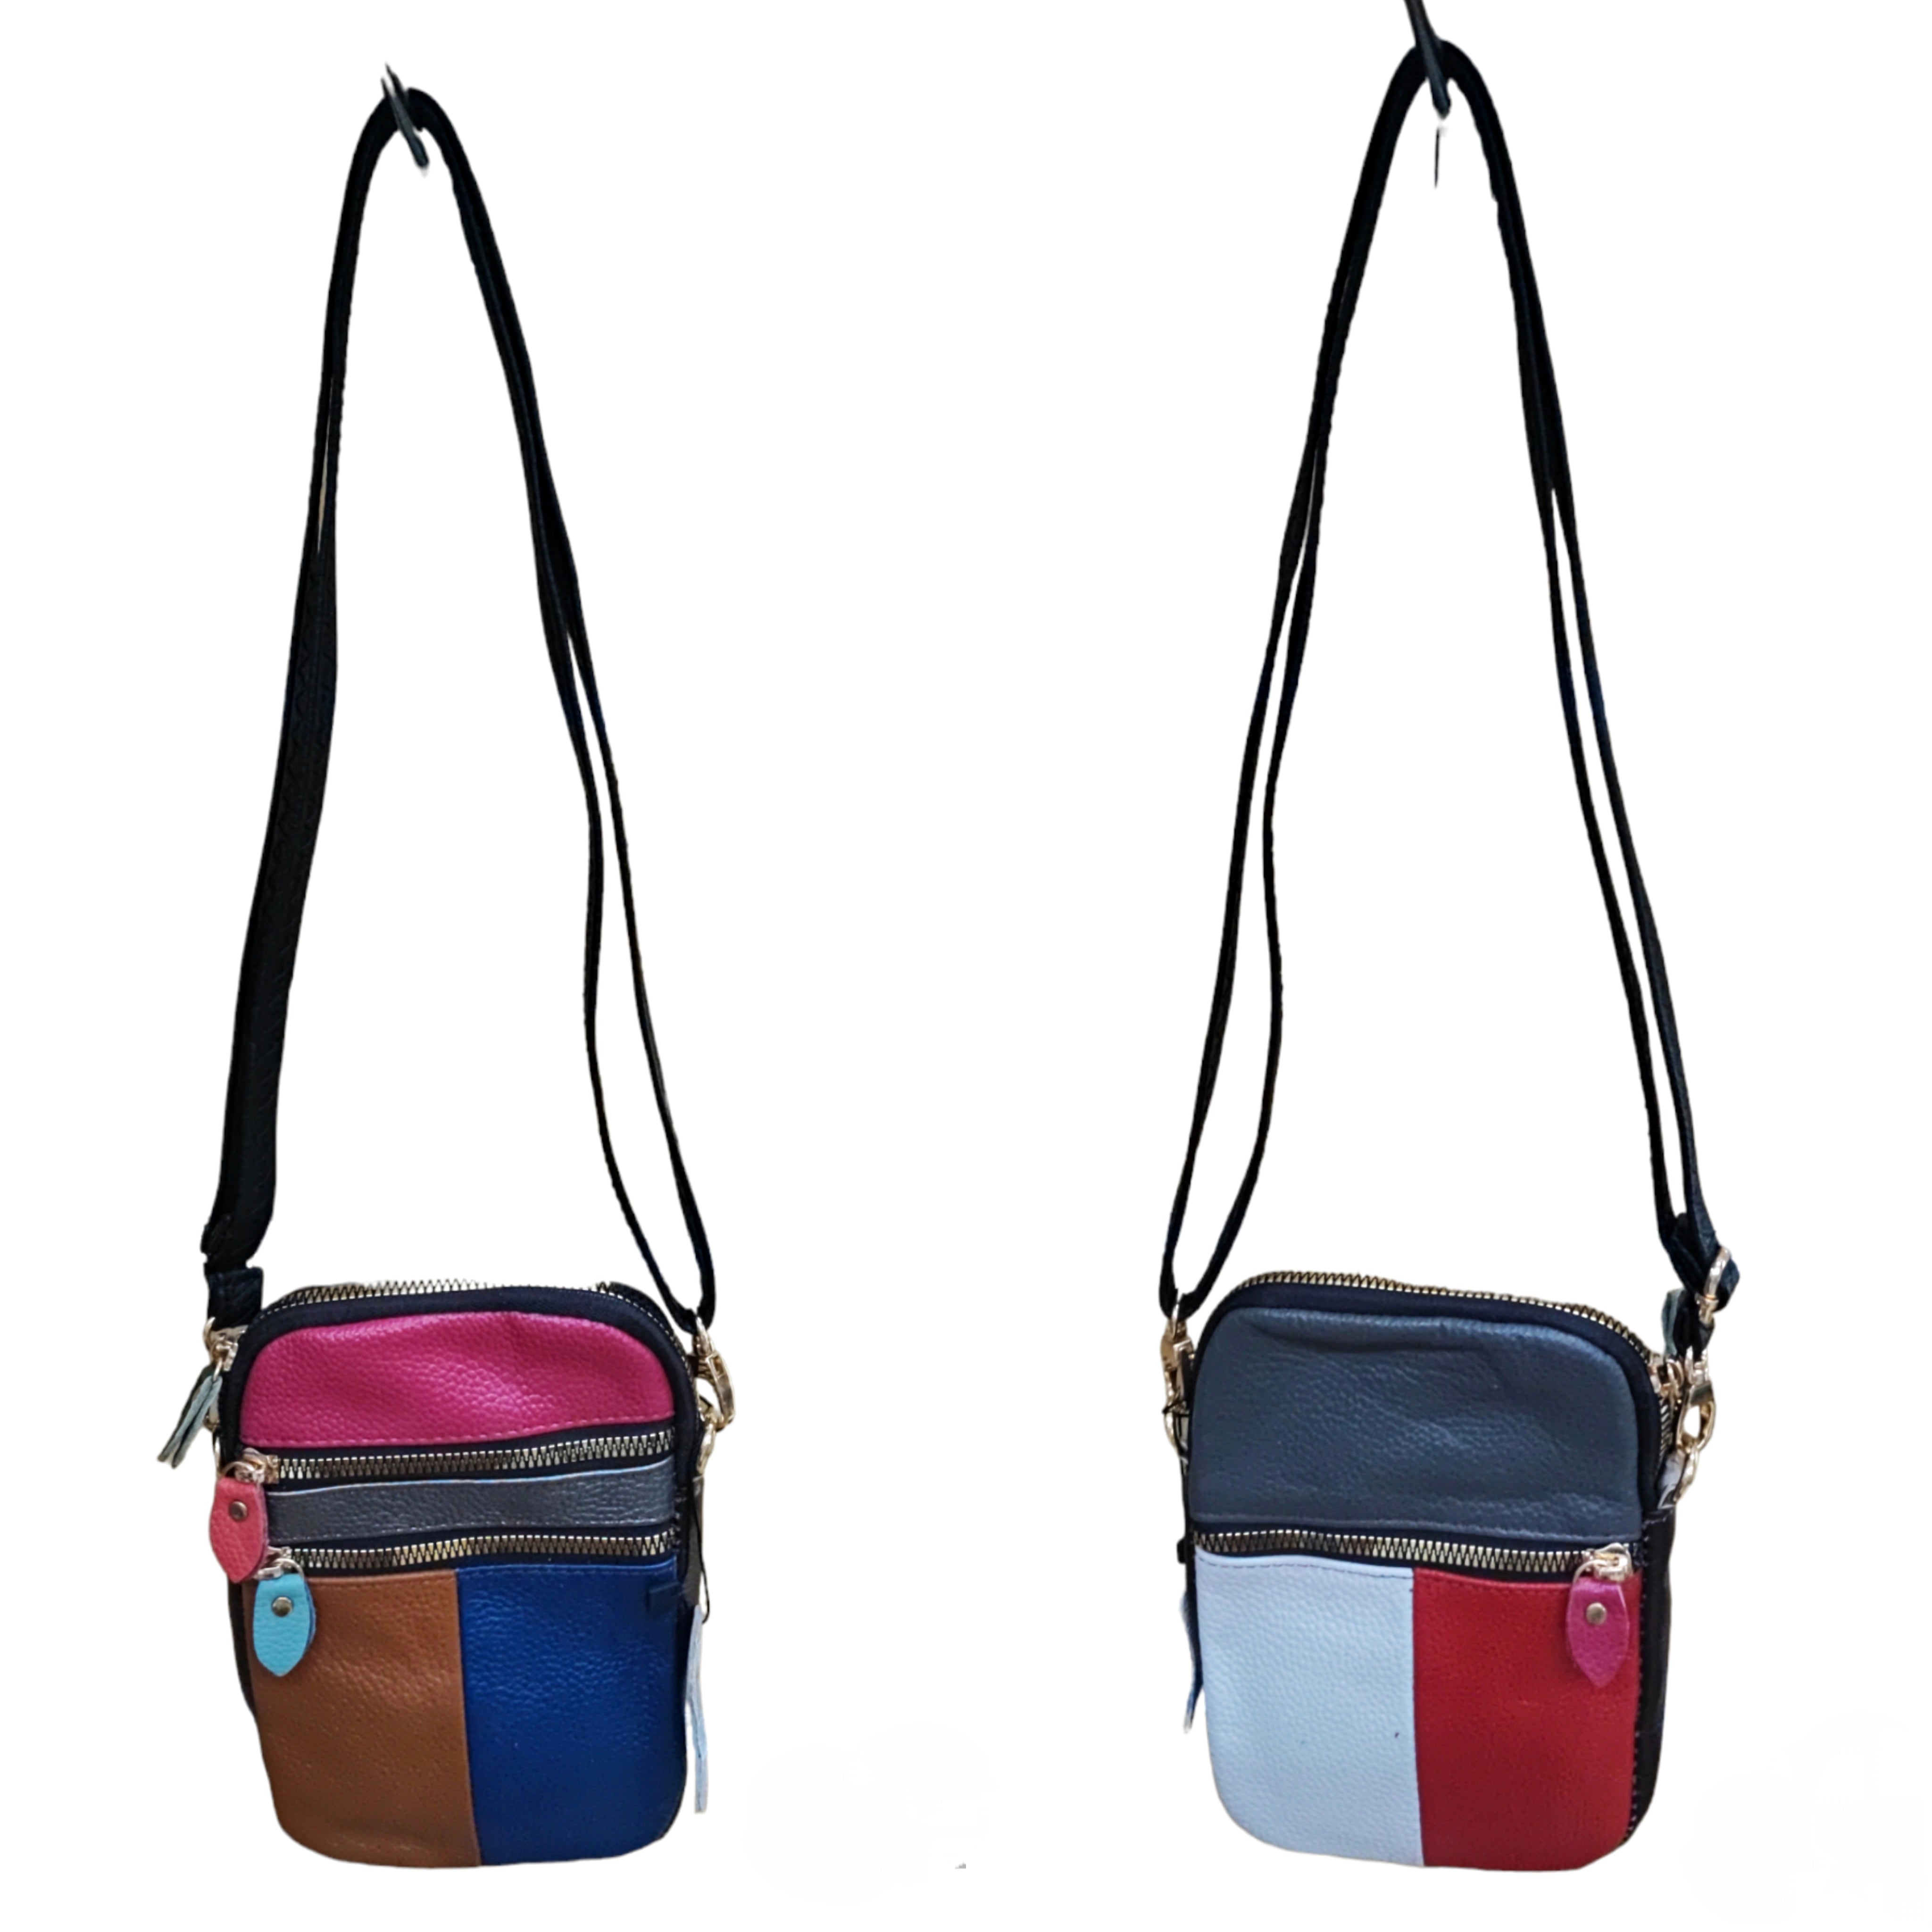 Multicolored bag - Genuine colored leather (X6)